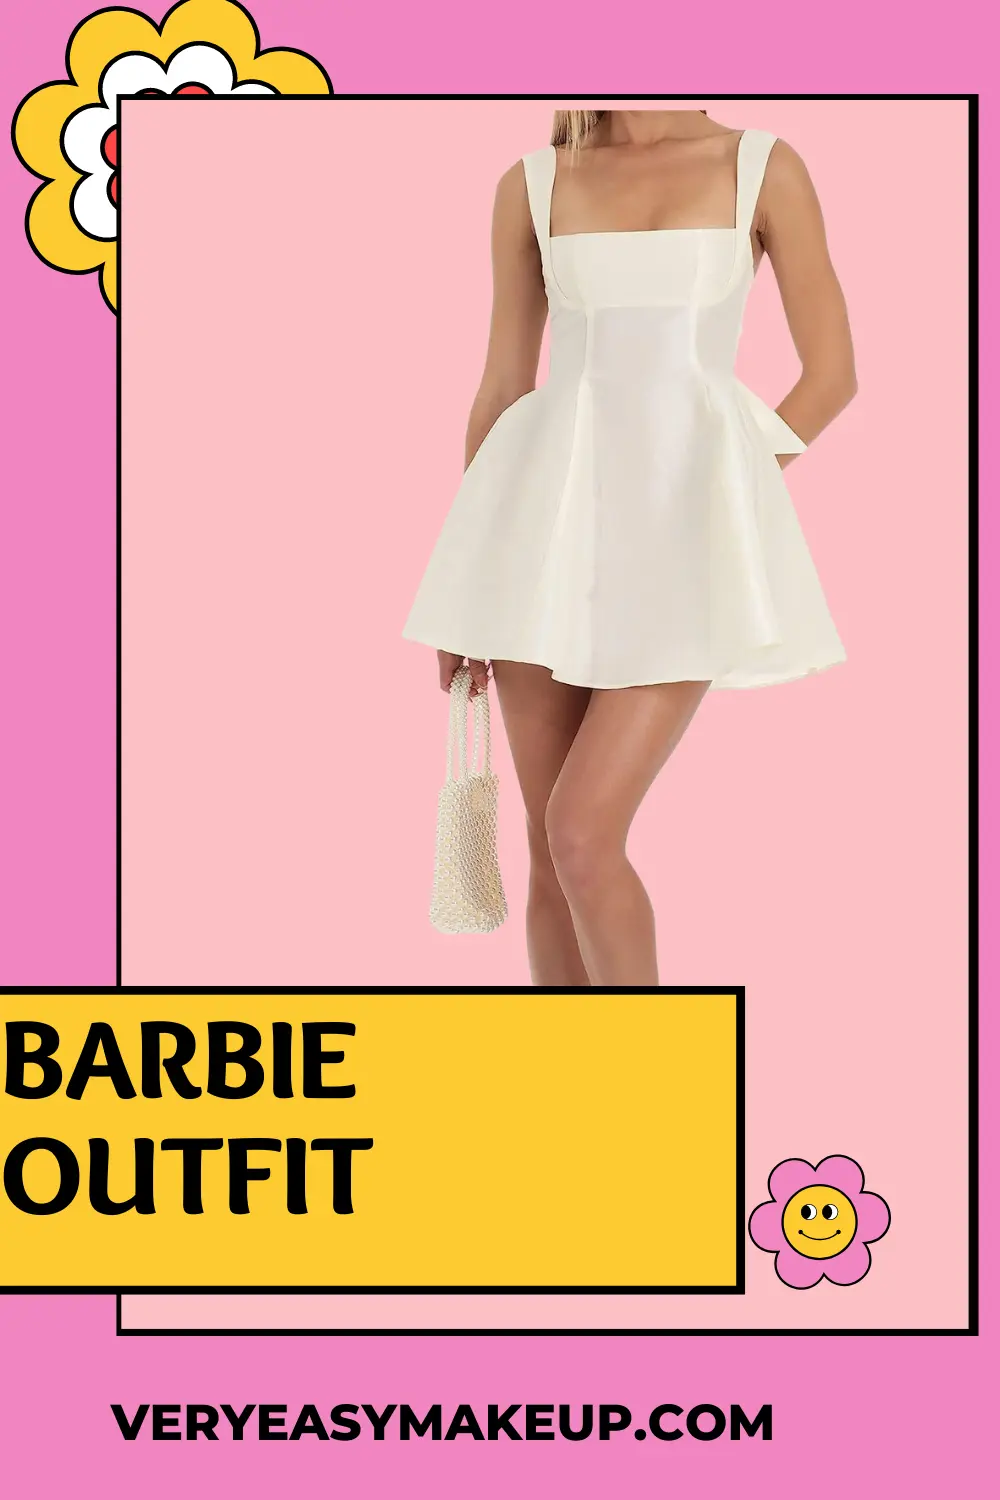 Barbie dress not pink